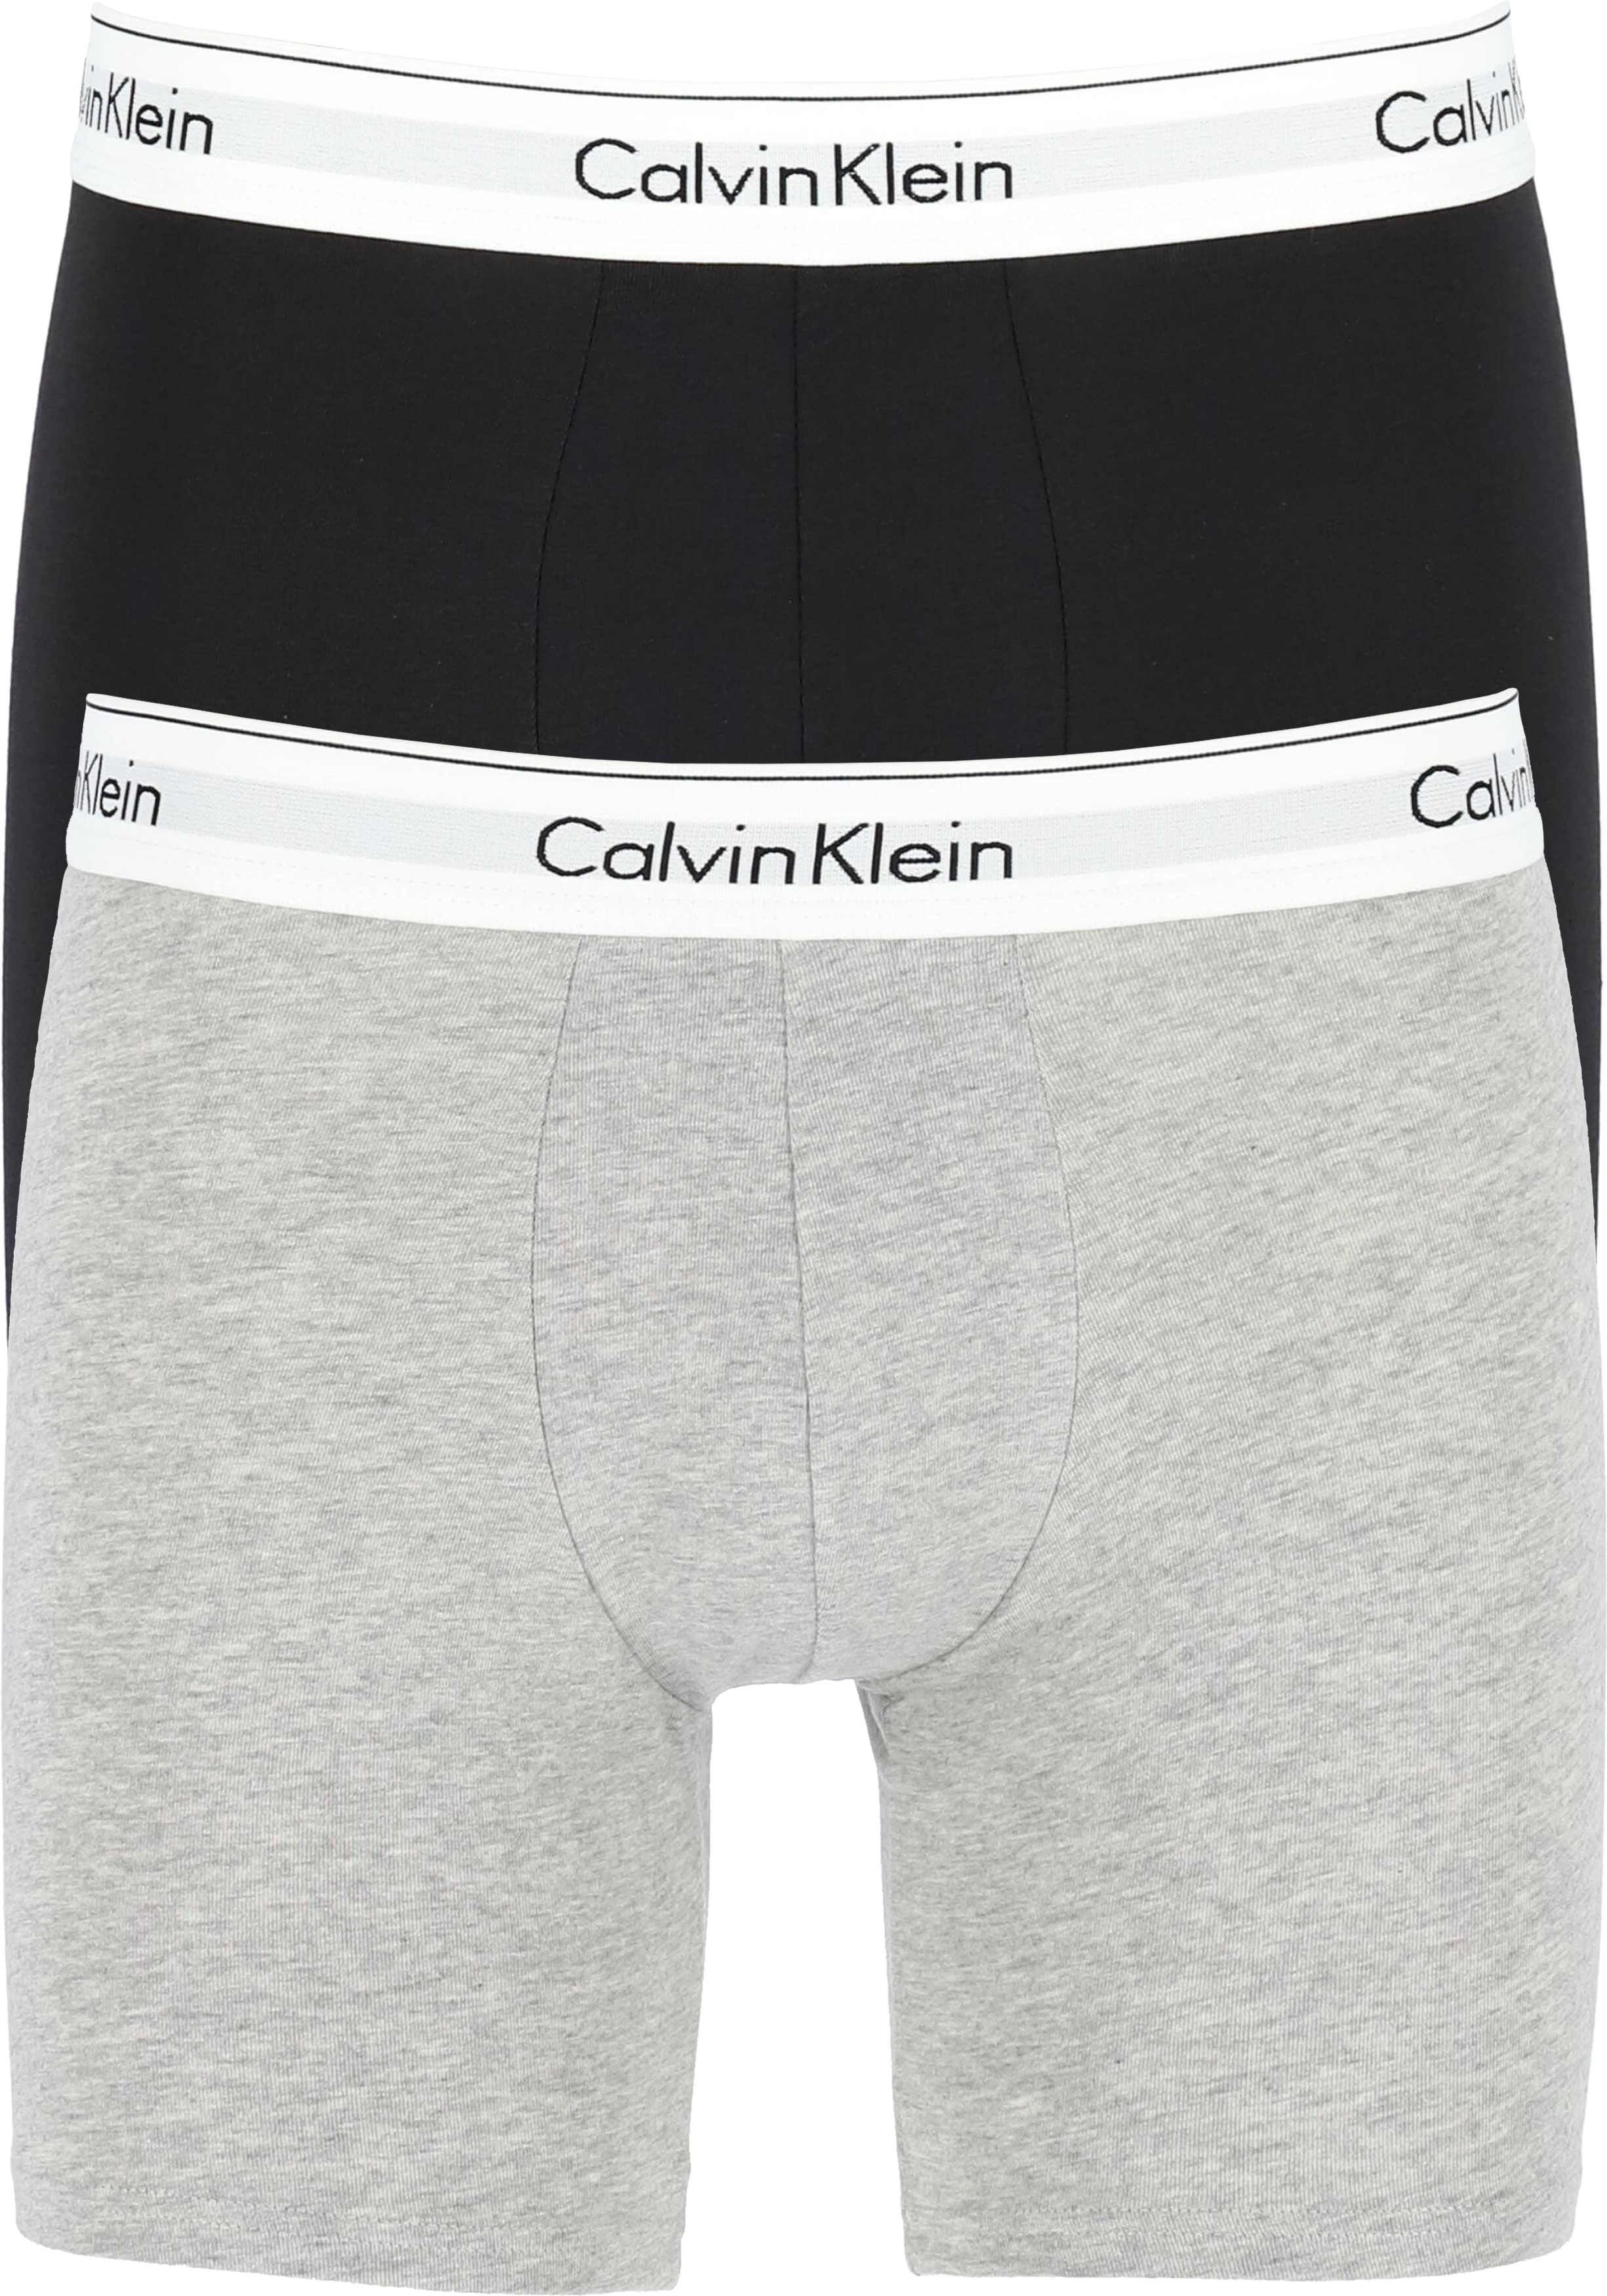 Calvin Klein Modern Cotton boxer brief (2-pack), heren boxers lang, zwart en grijs